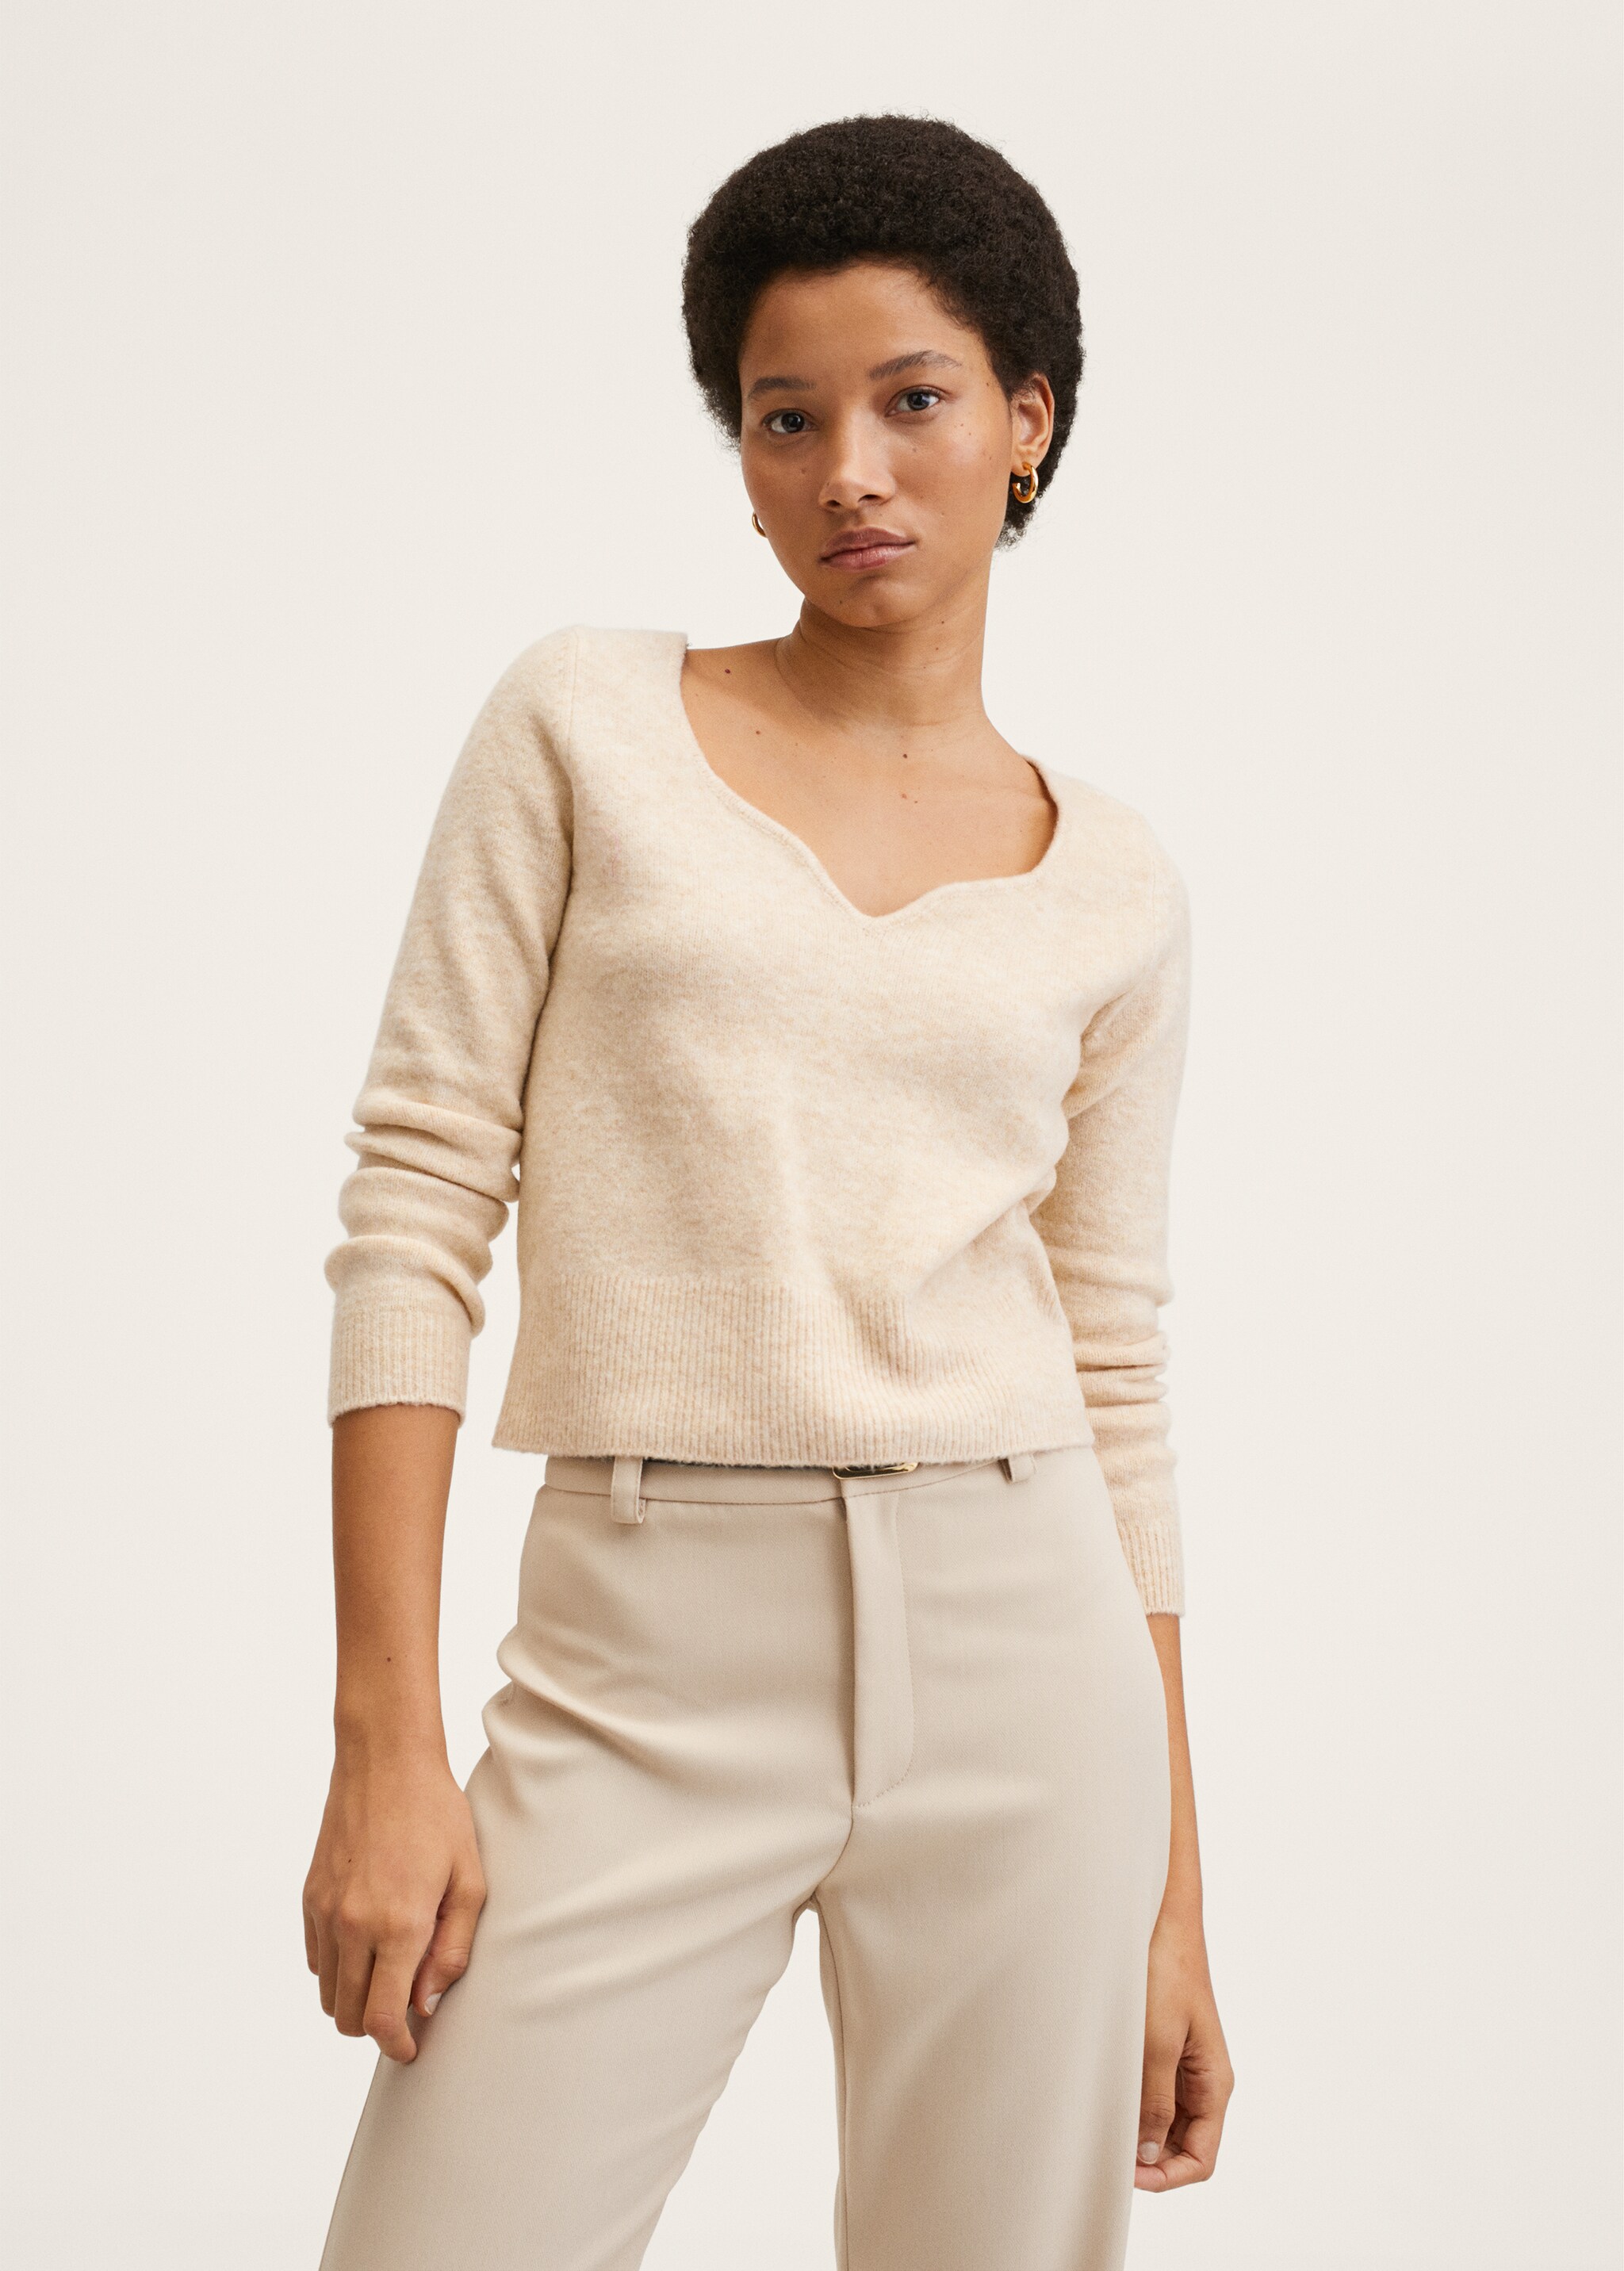 Textured knit sweater - Medium plane